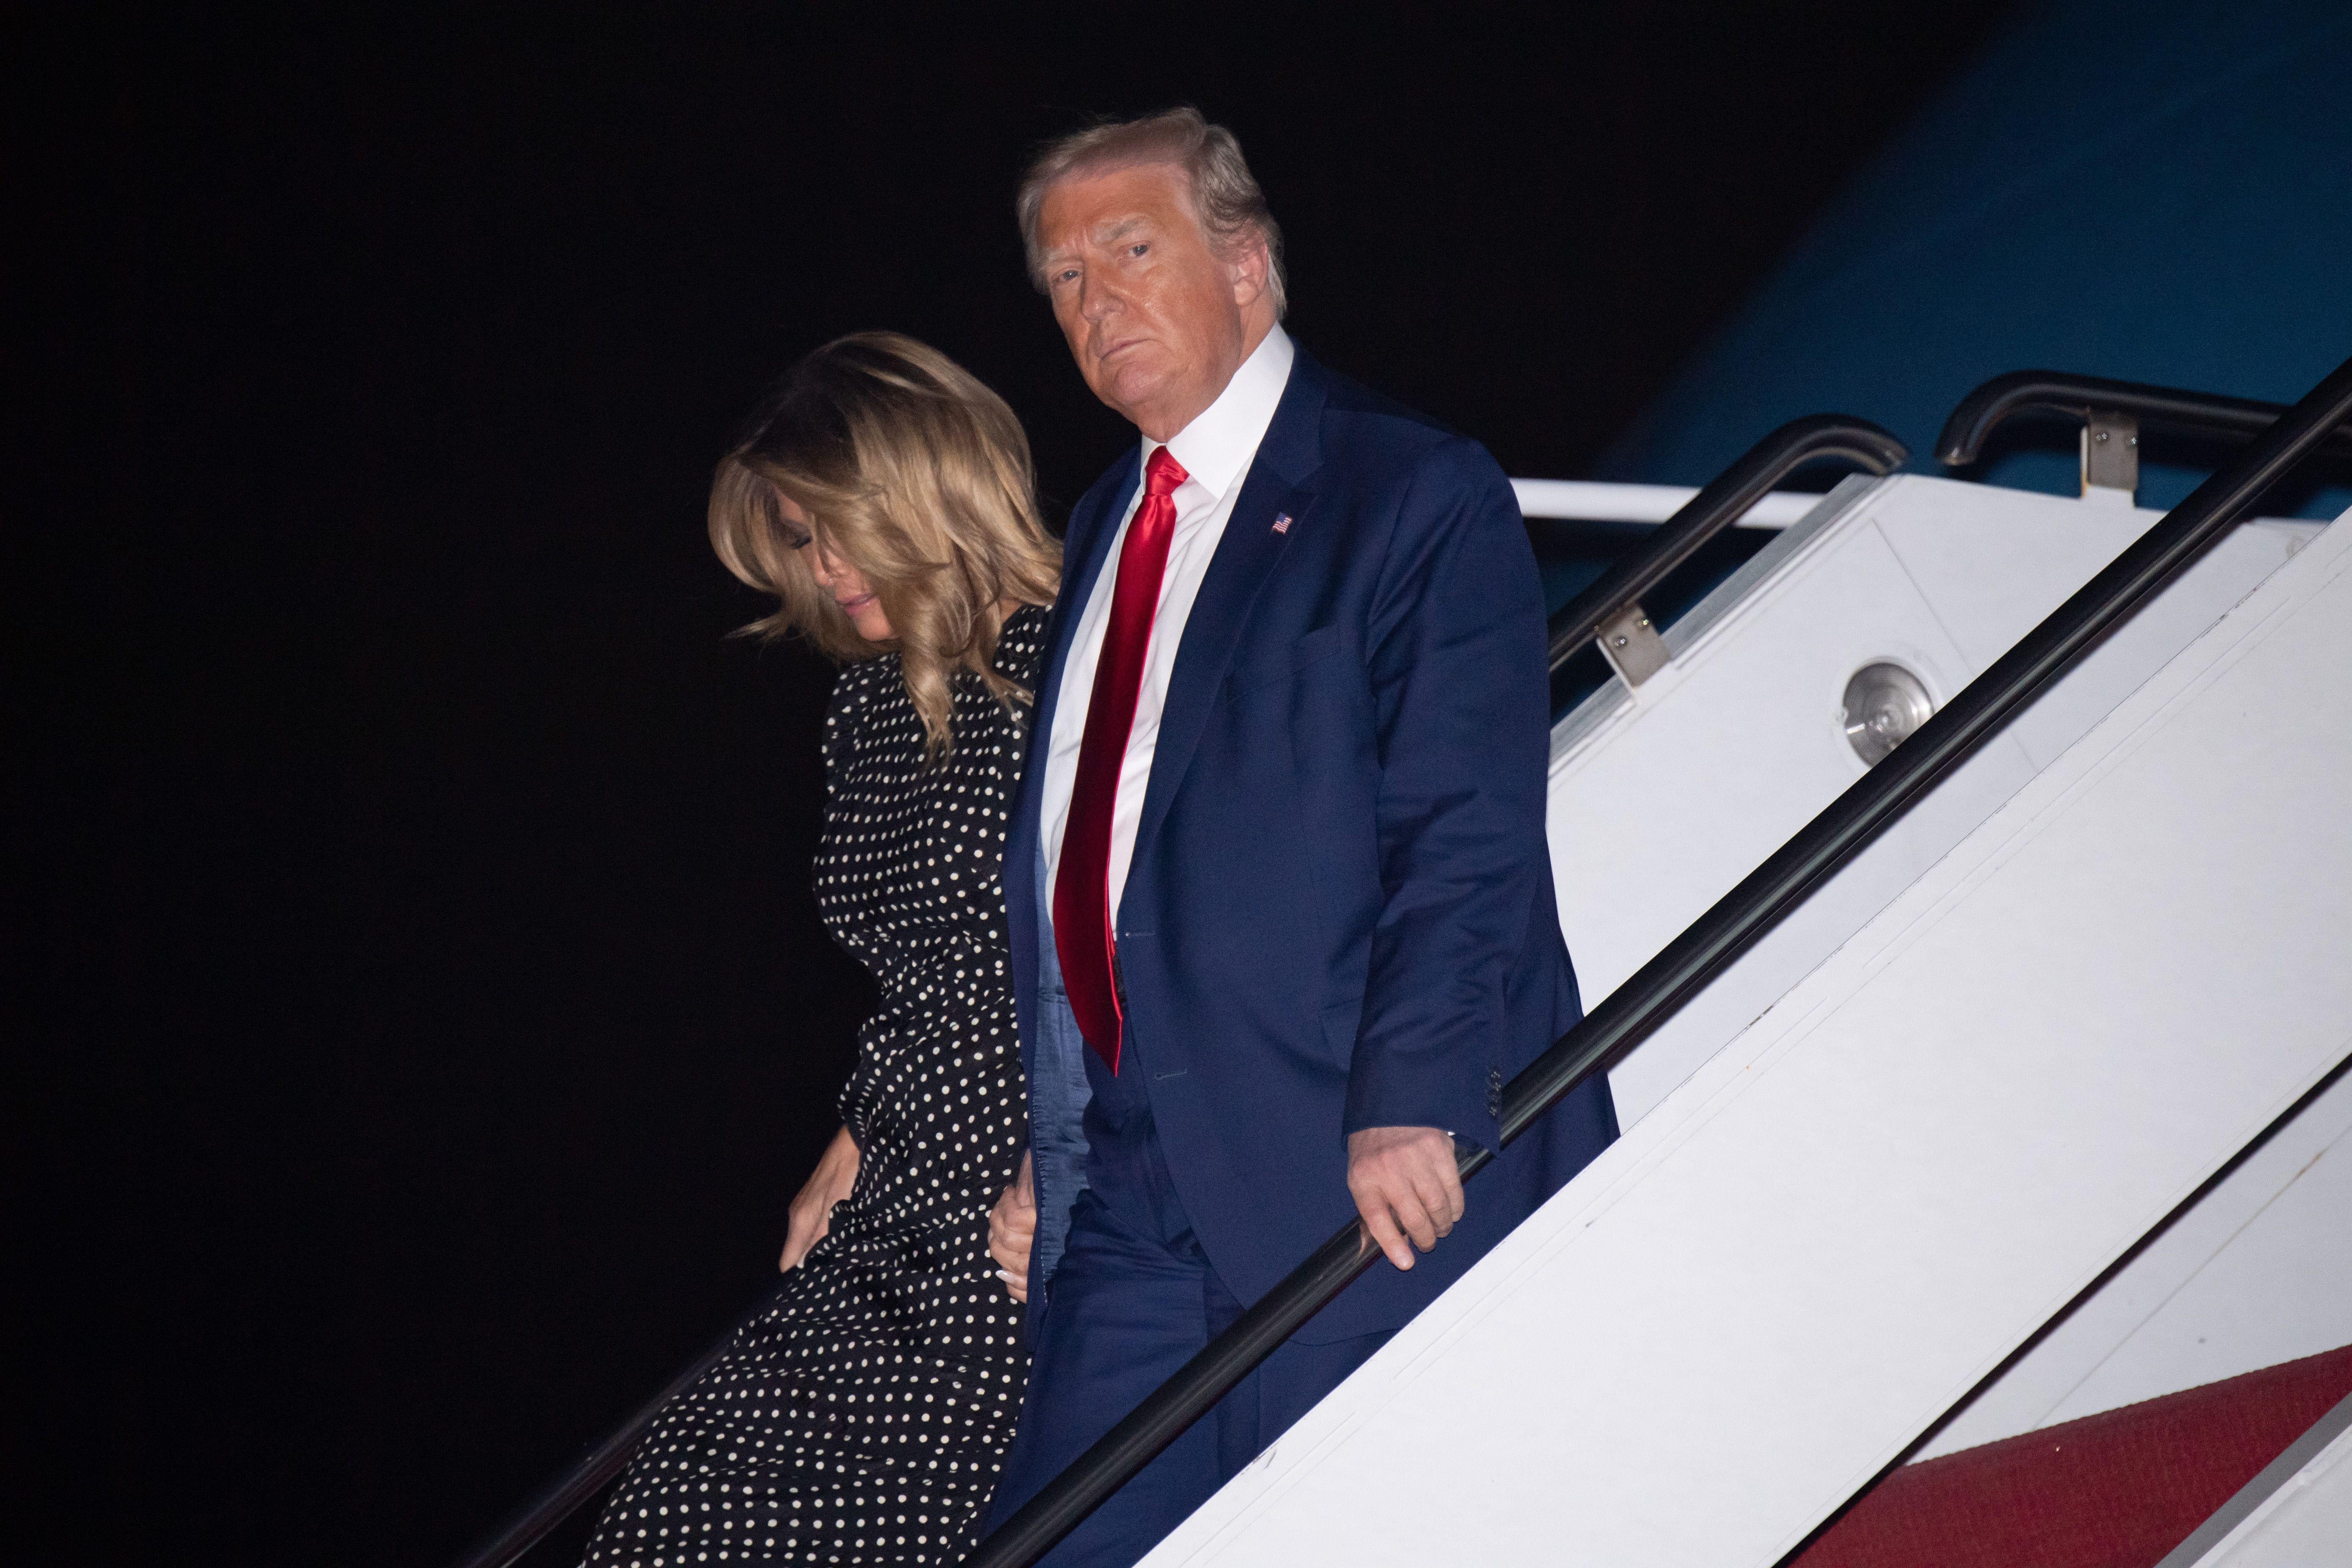 Donald Trump and Melania Trump disembark from Air Force One at night